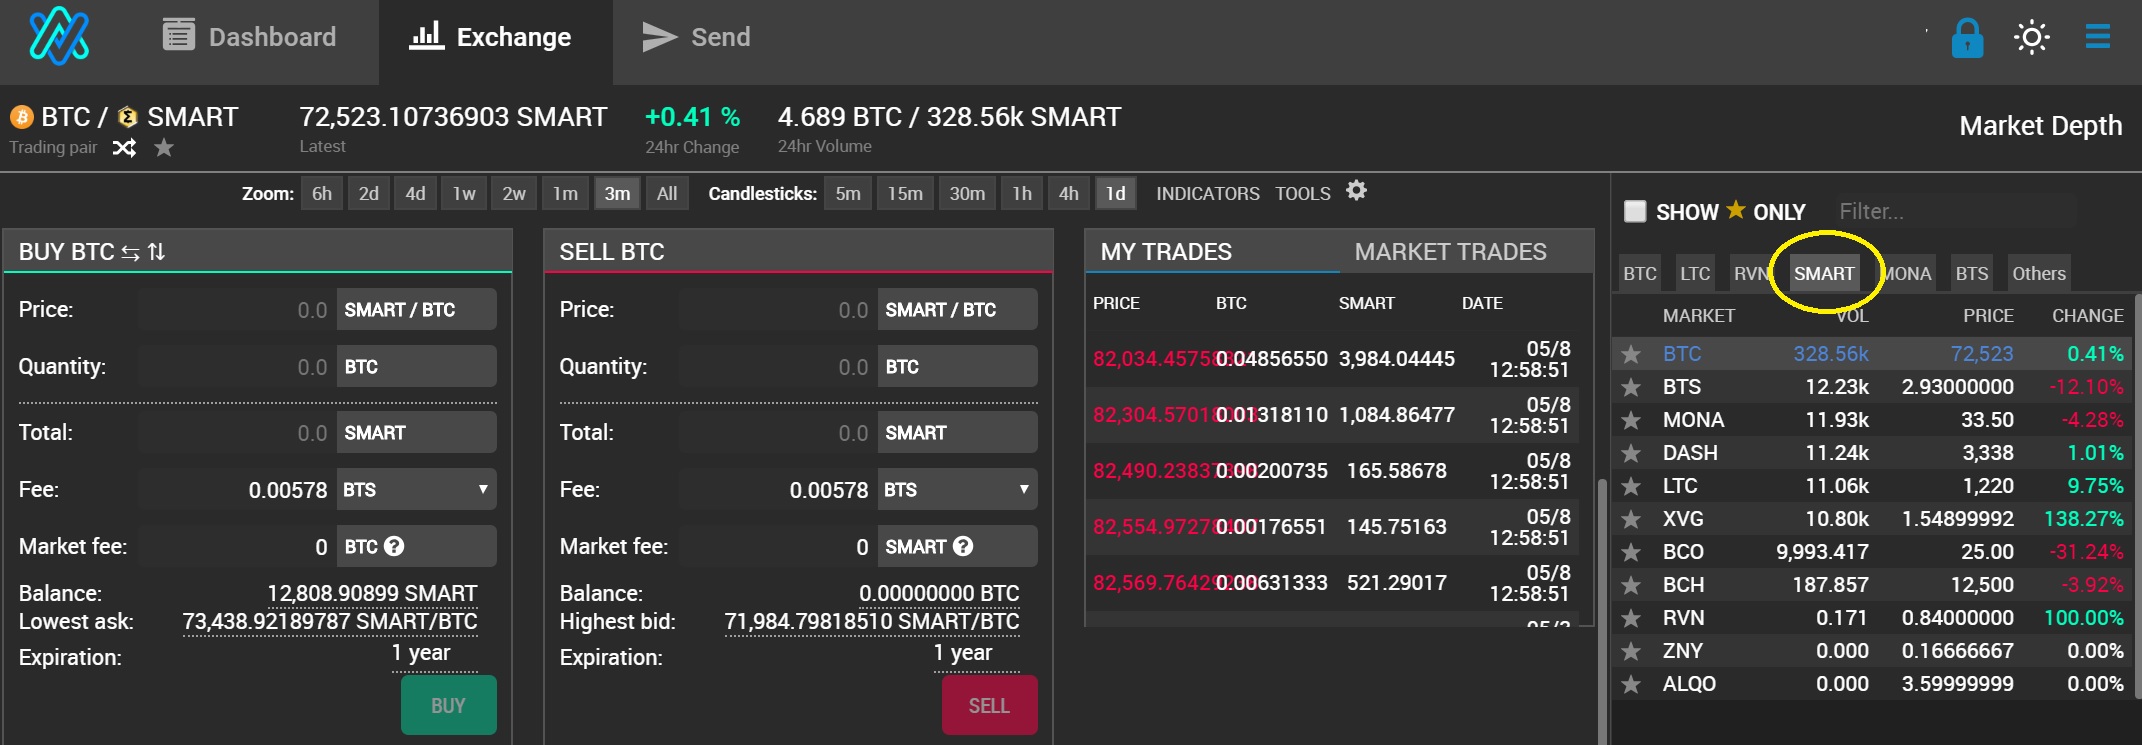 SmartCash Own Trading Tab on Crypto Bridge - Bitshares Technology.jpg